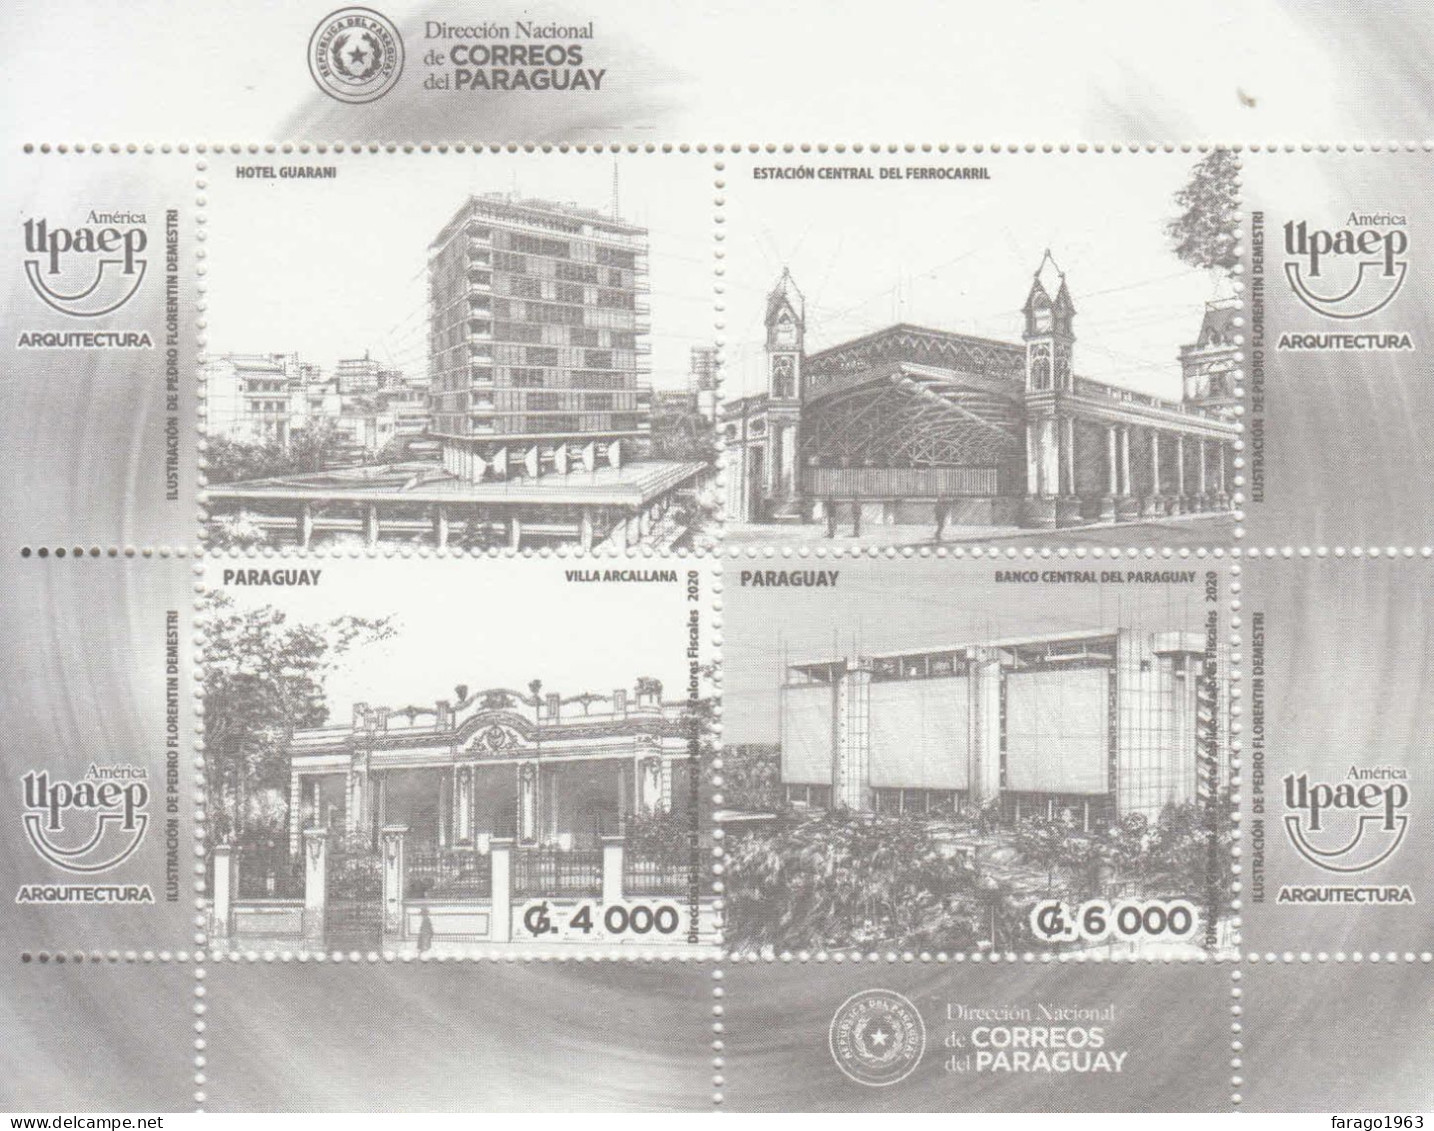 2020 Paraguay Upaep Architecture Souvenir Sheet MNH - Paraguay